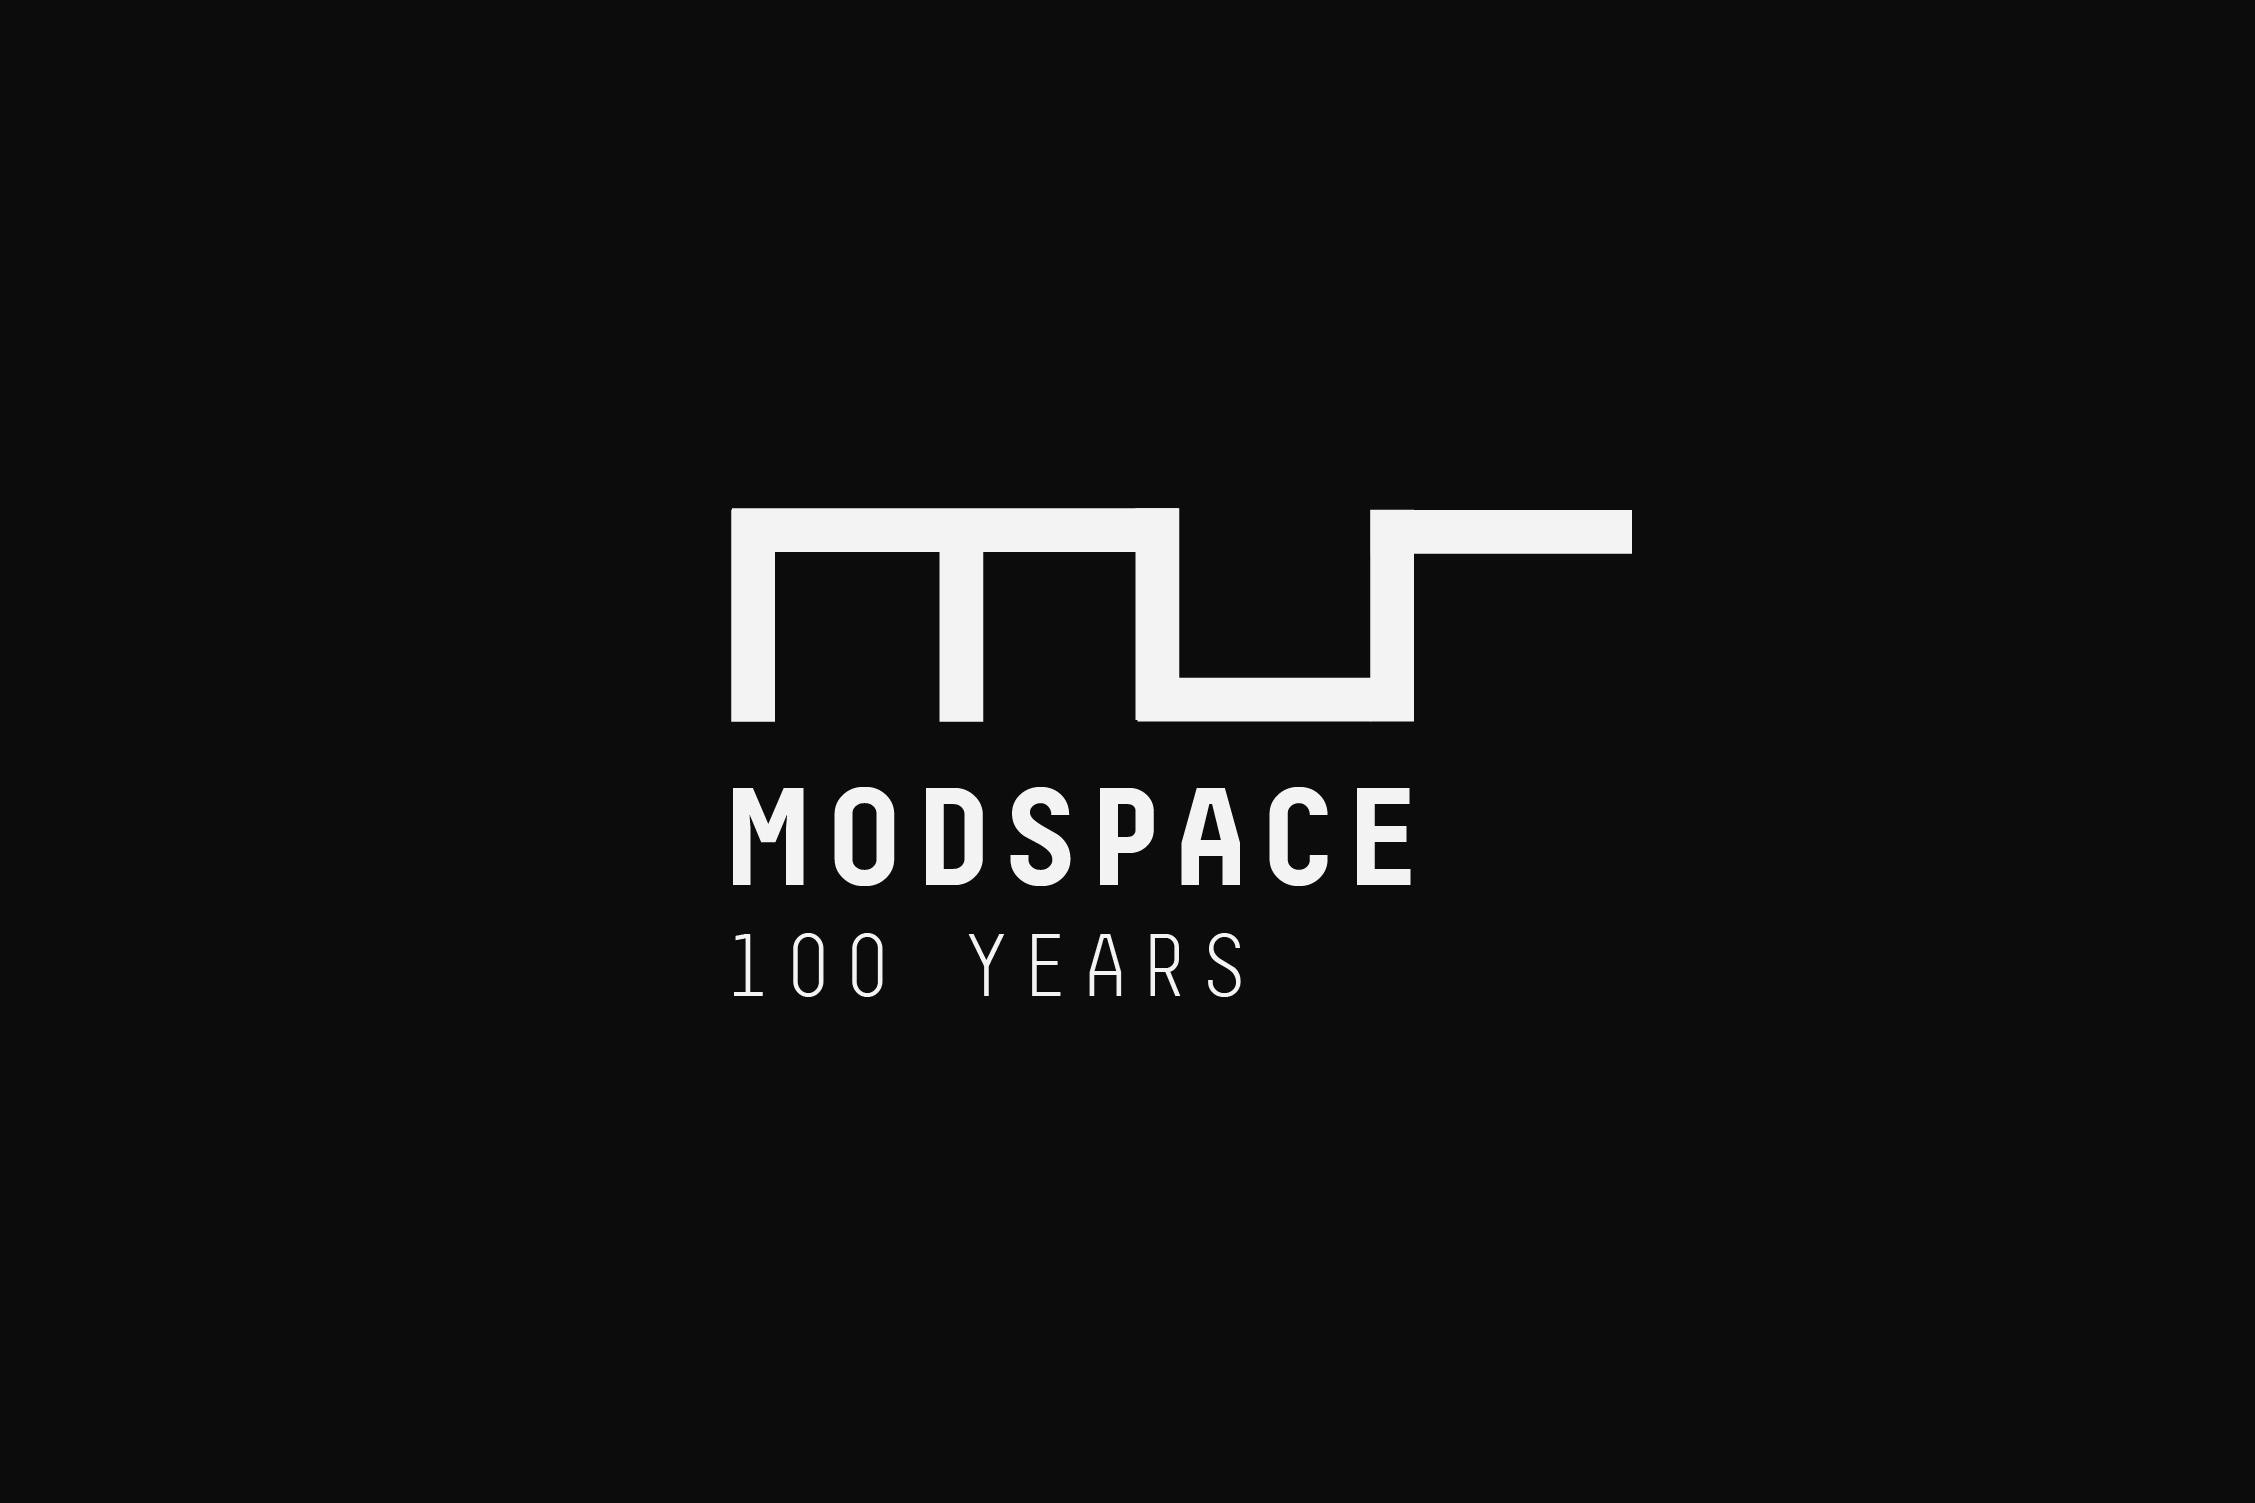 Modspace